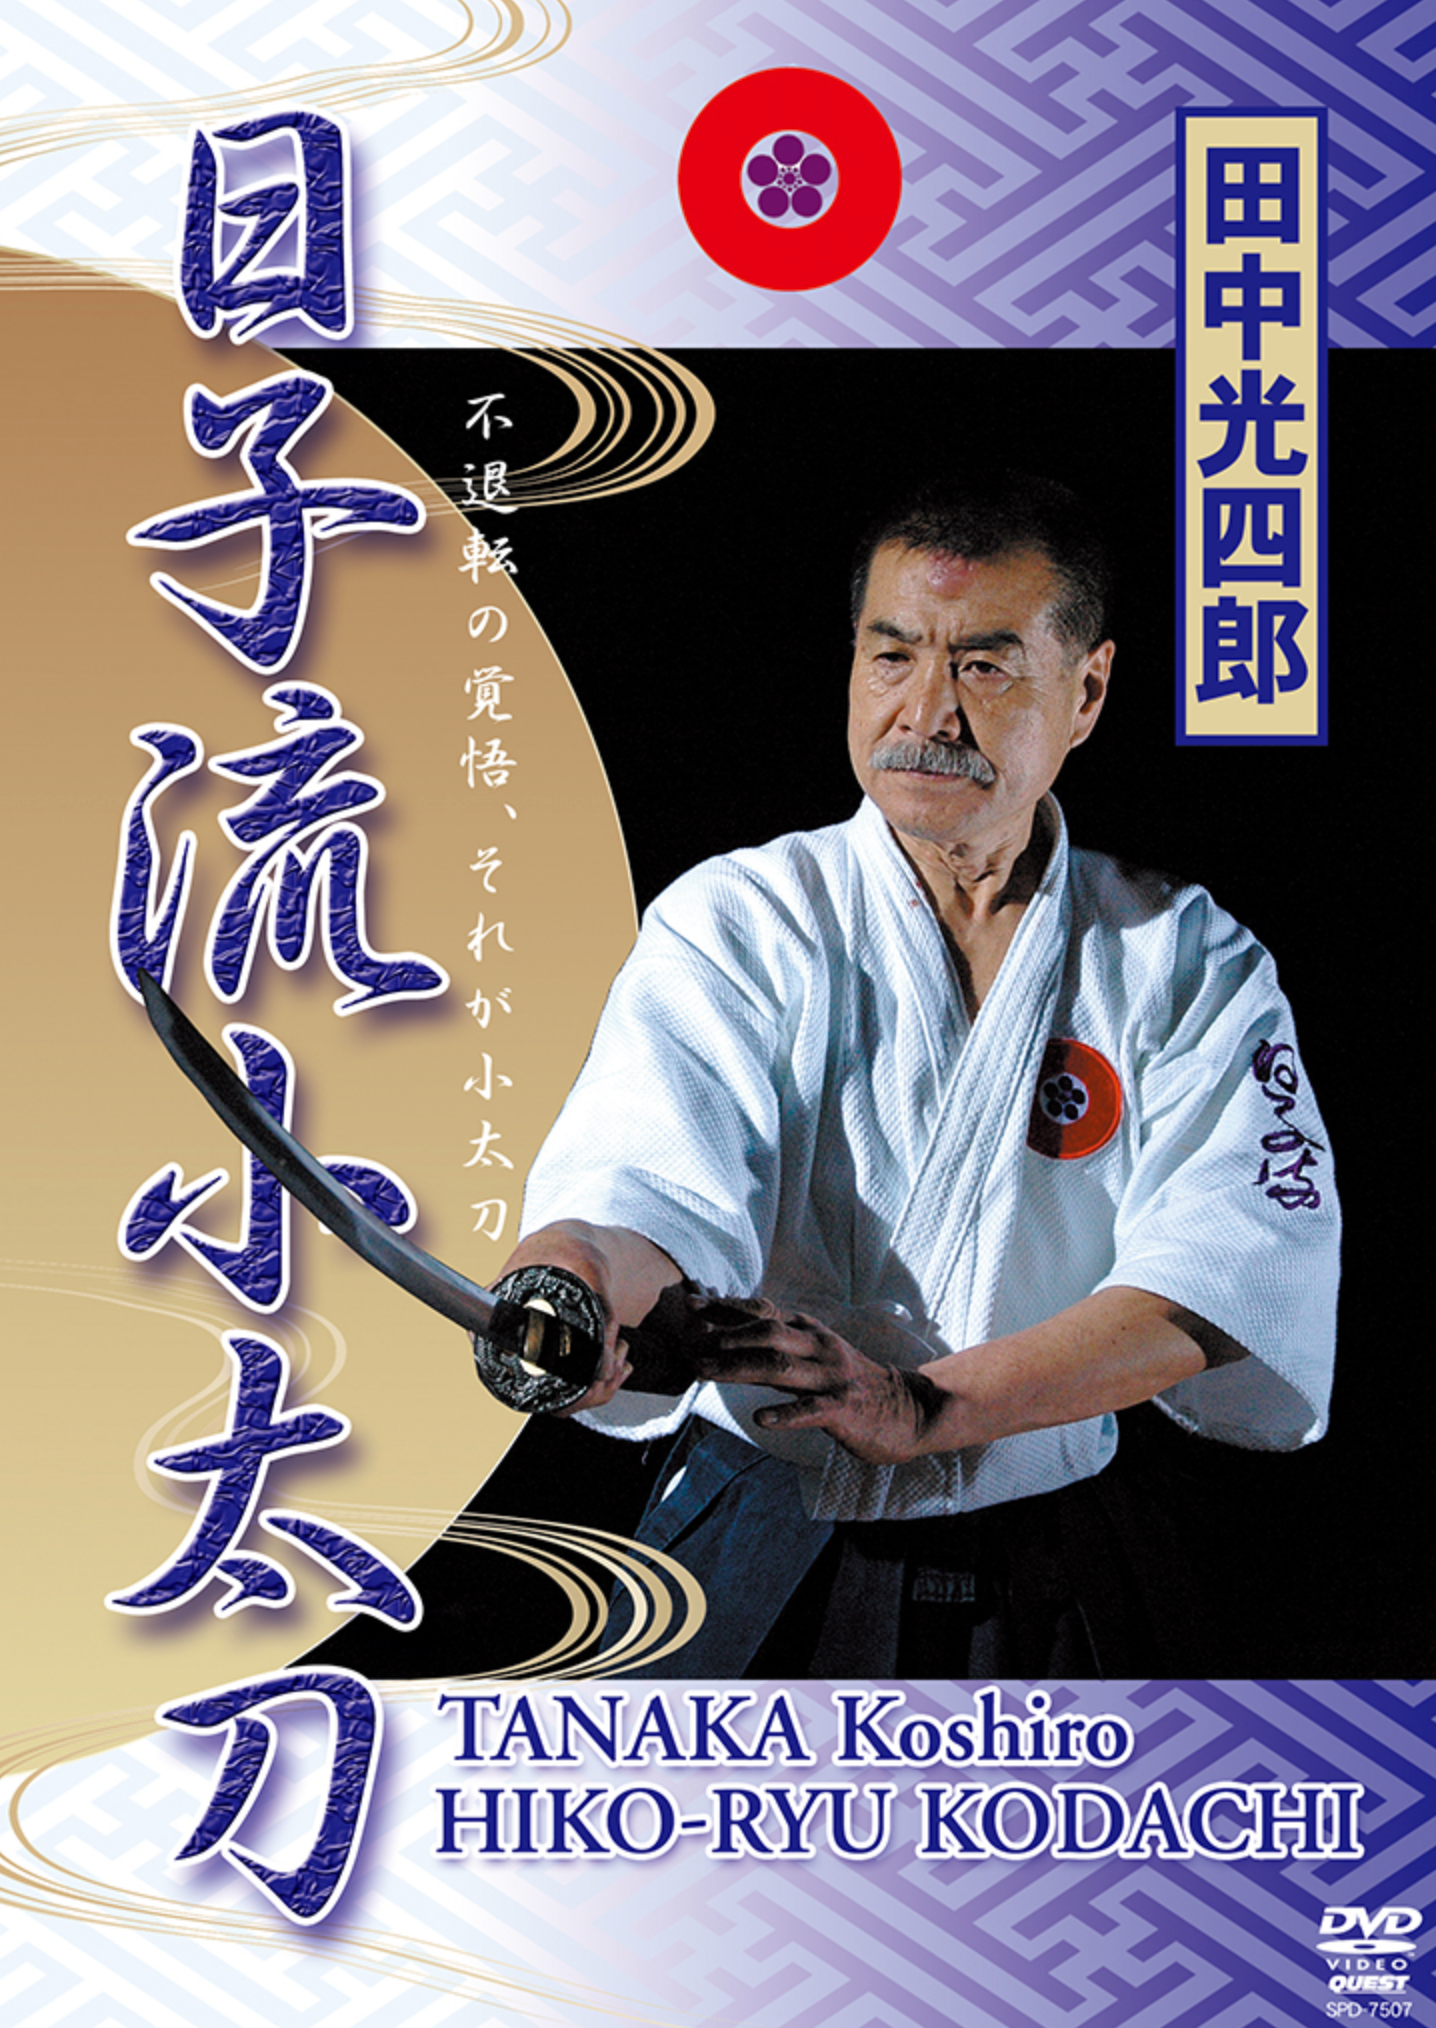 Hiko Ryu Kodachi DVD with Koshiro Tanaka - Budovideos Inc